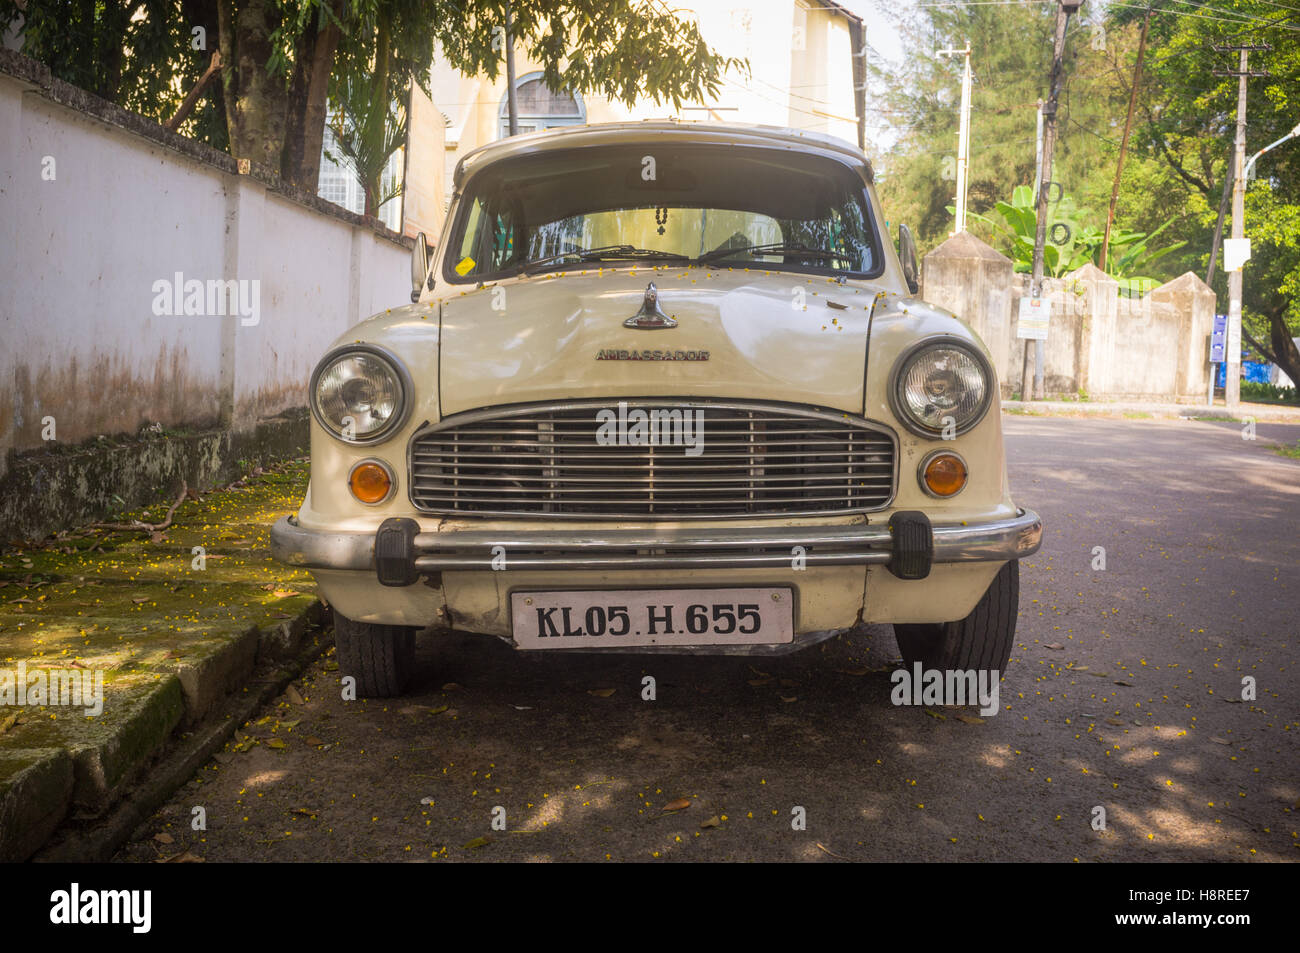 Hindustan Ambassador car in a street in Kochi (cochin) India Stock Photo